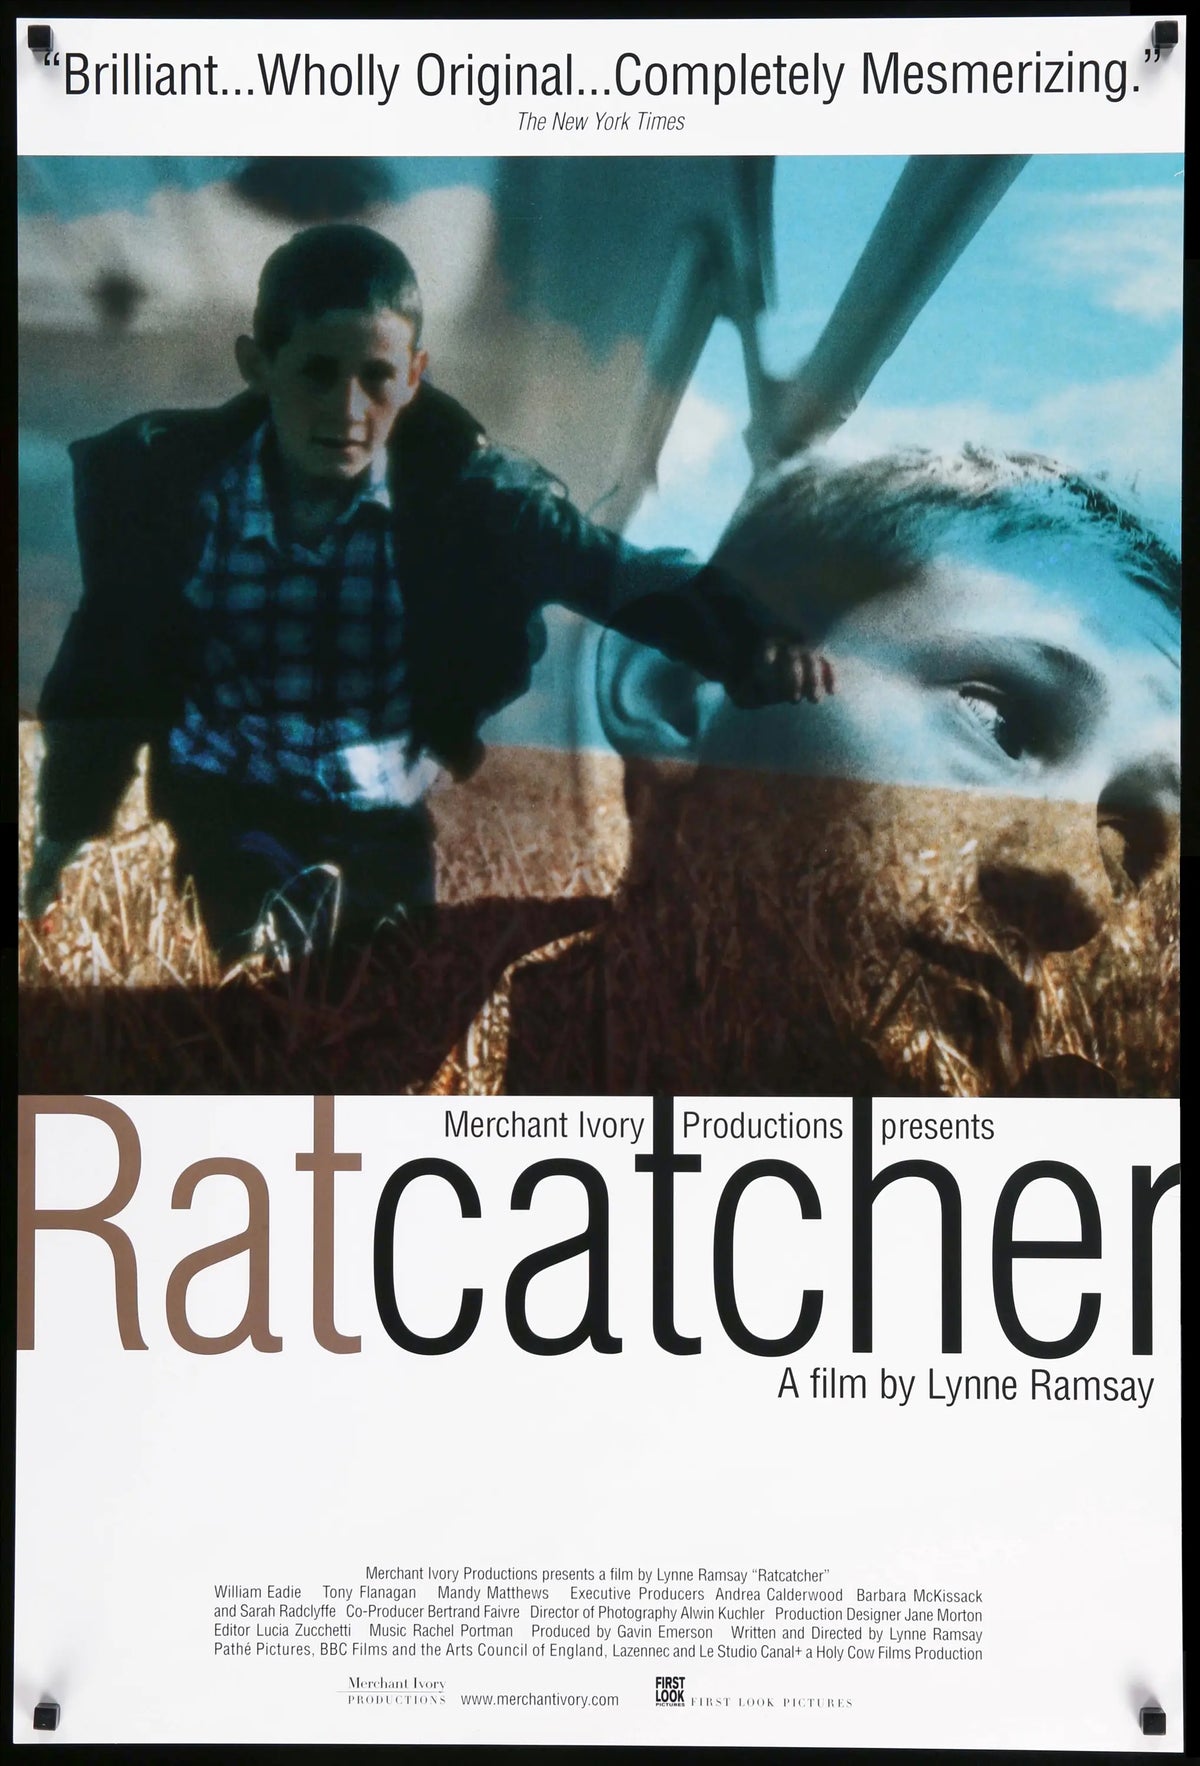 Ratcatcher (1999) original movie poster for sale at Original Film Art